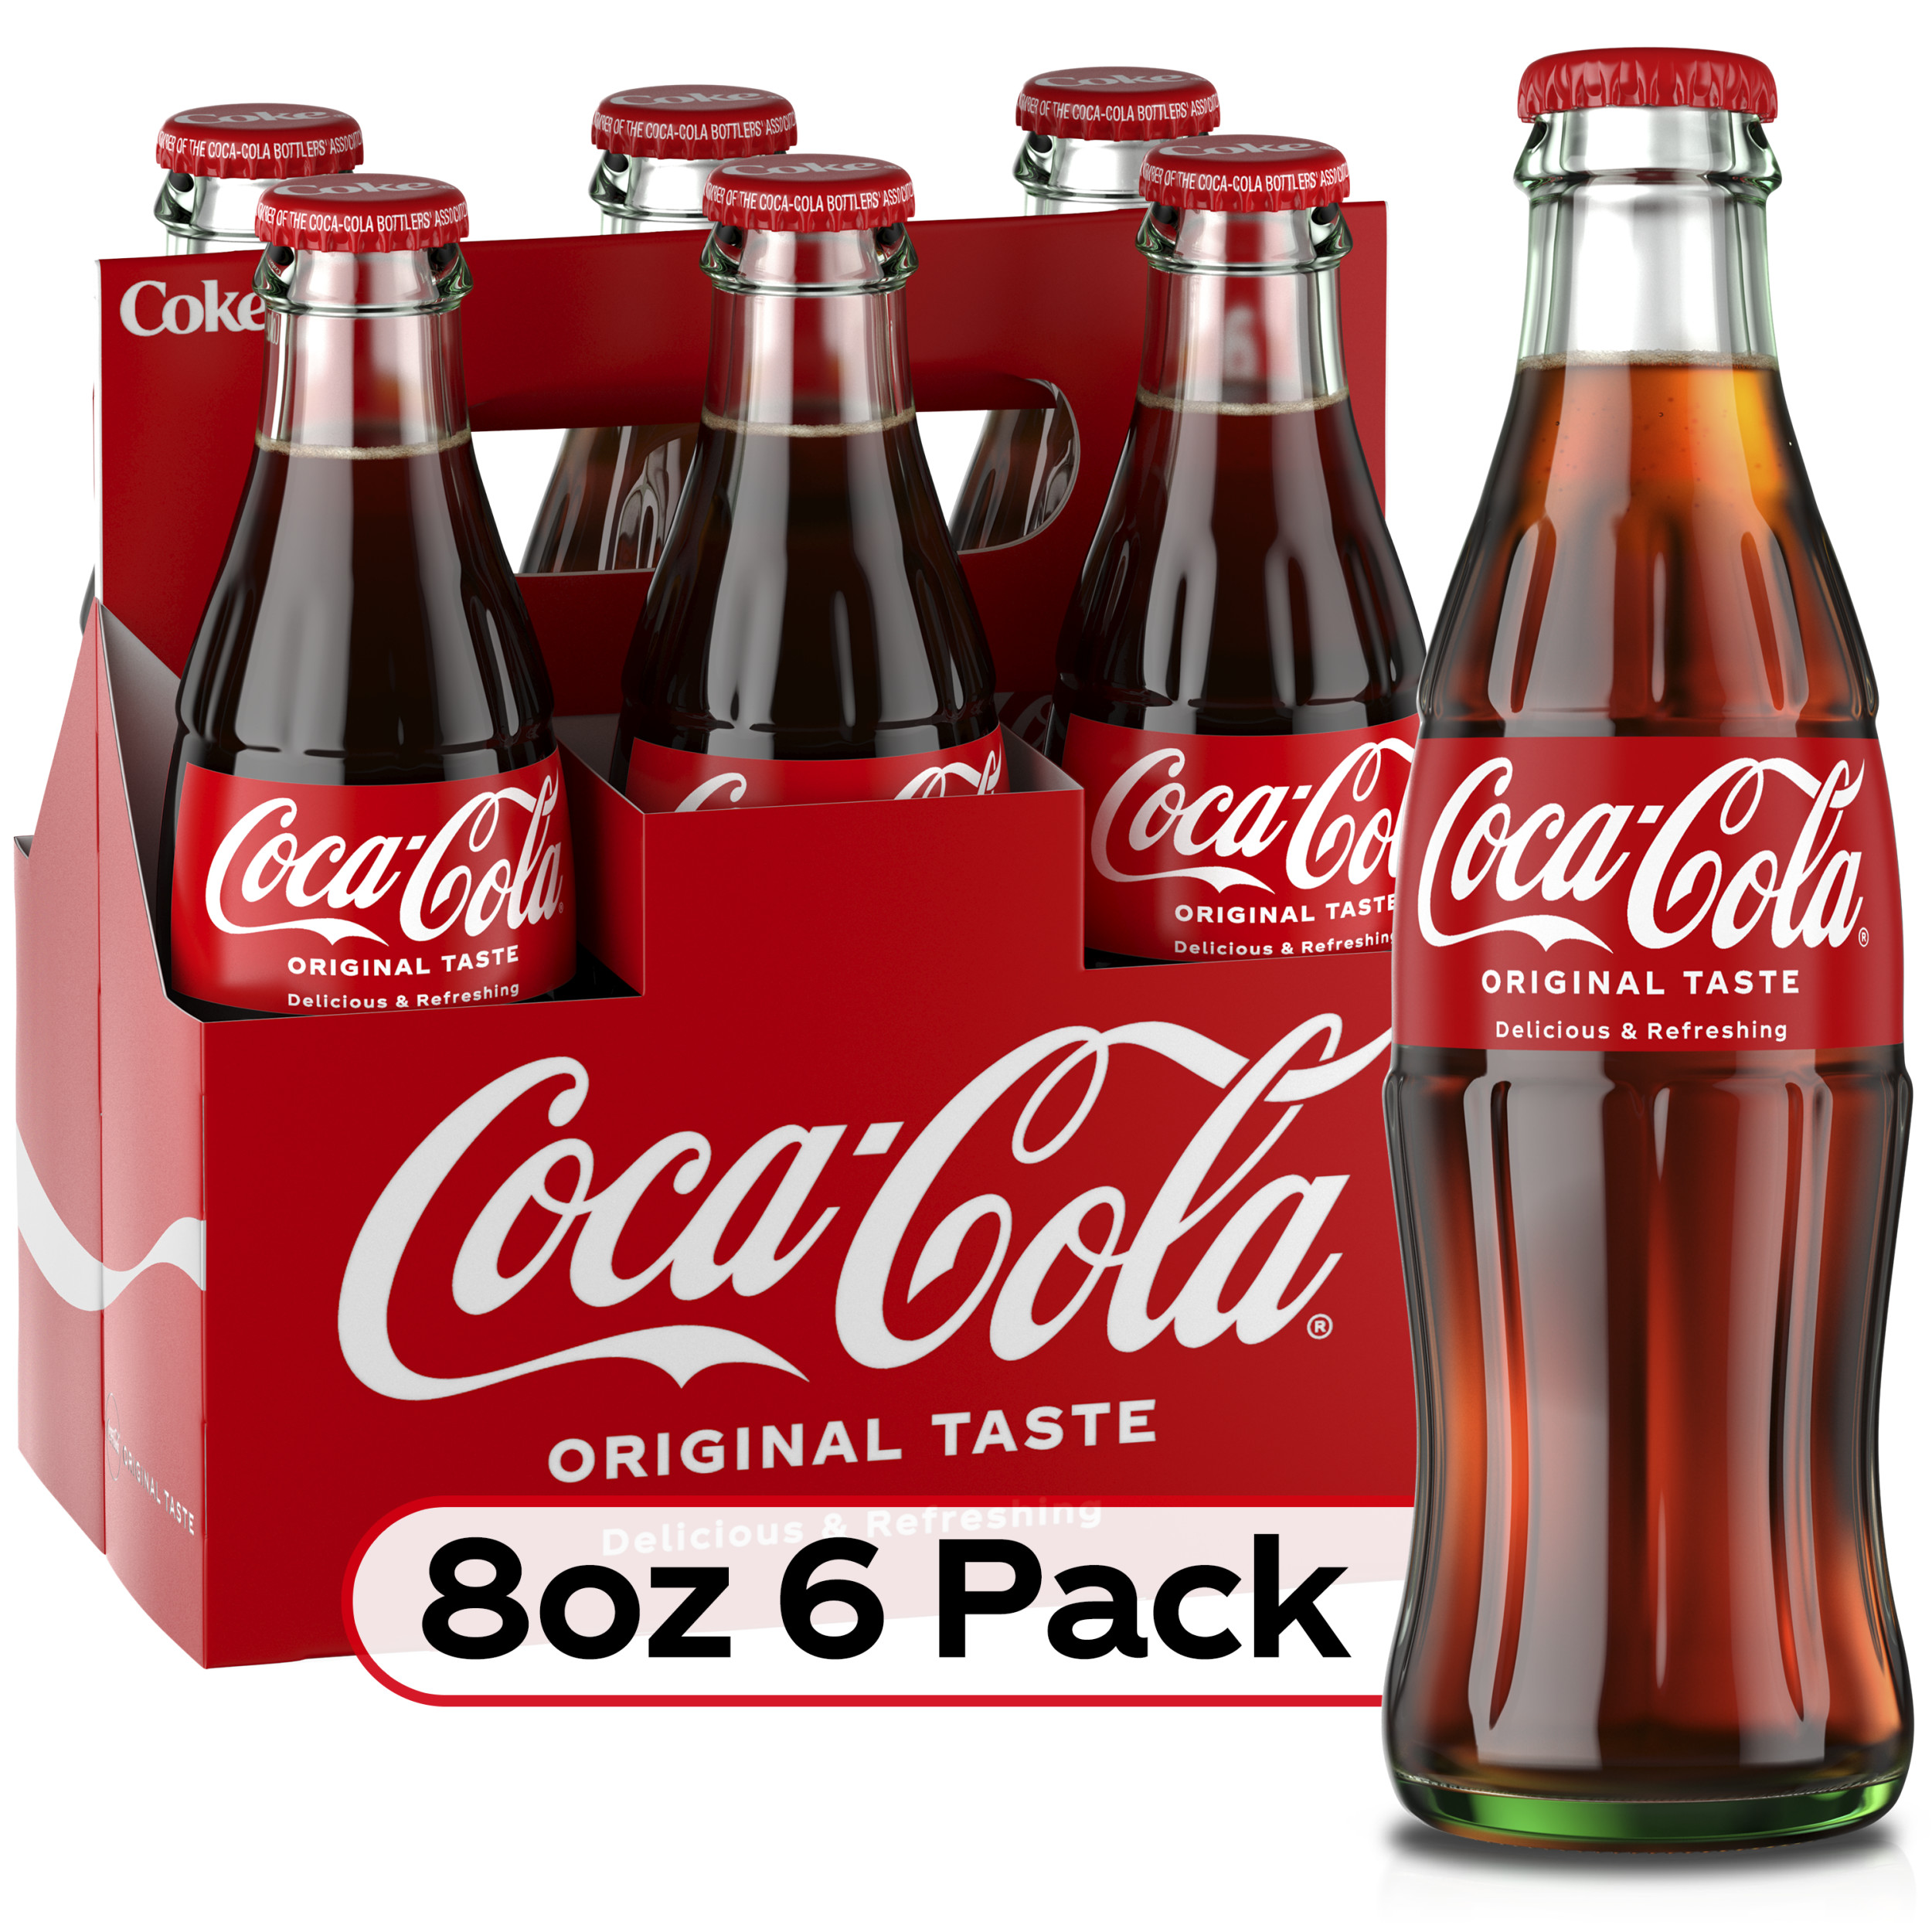 Coke Bottle Images